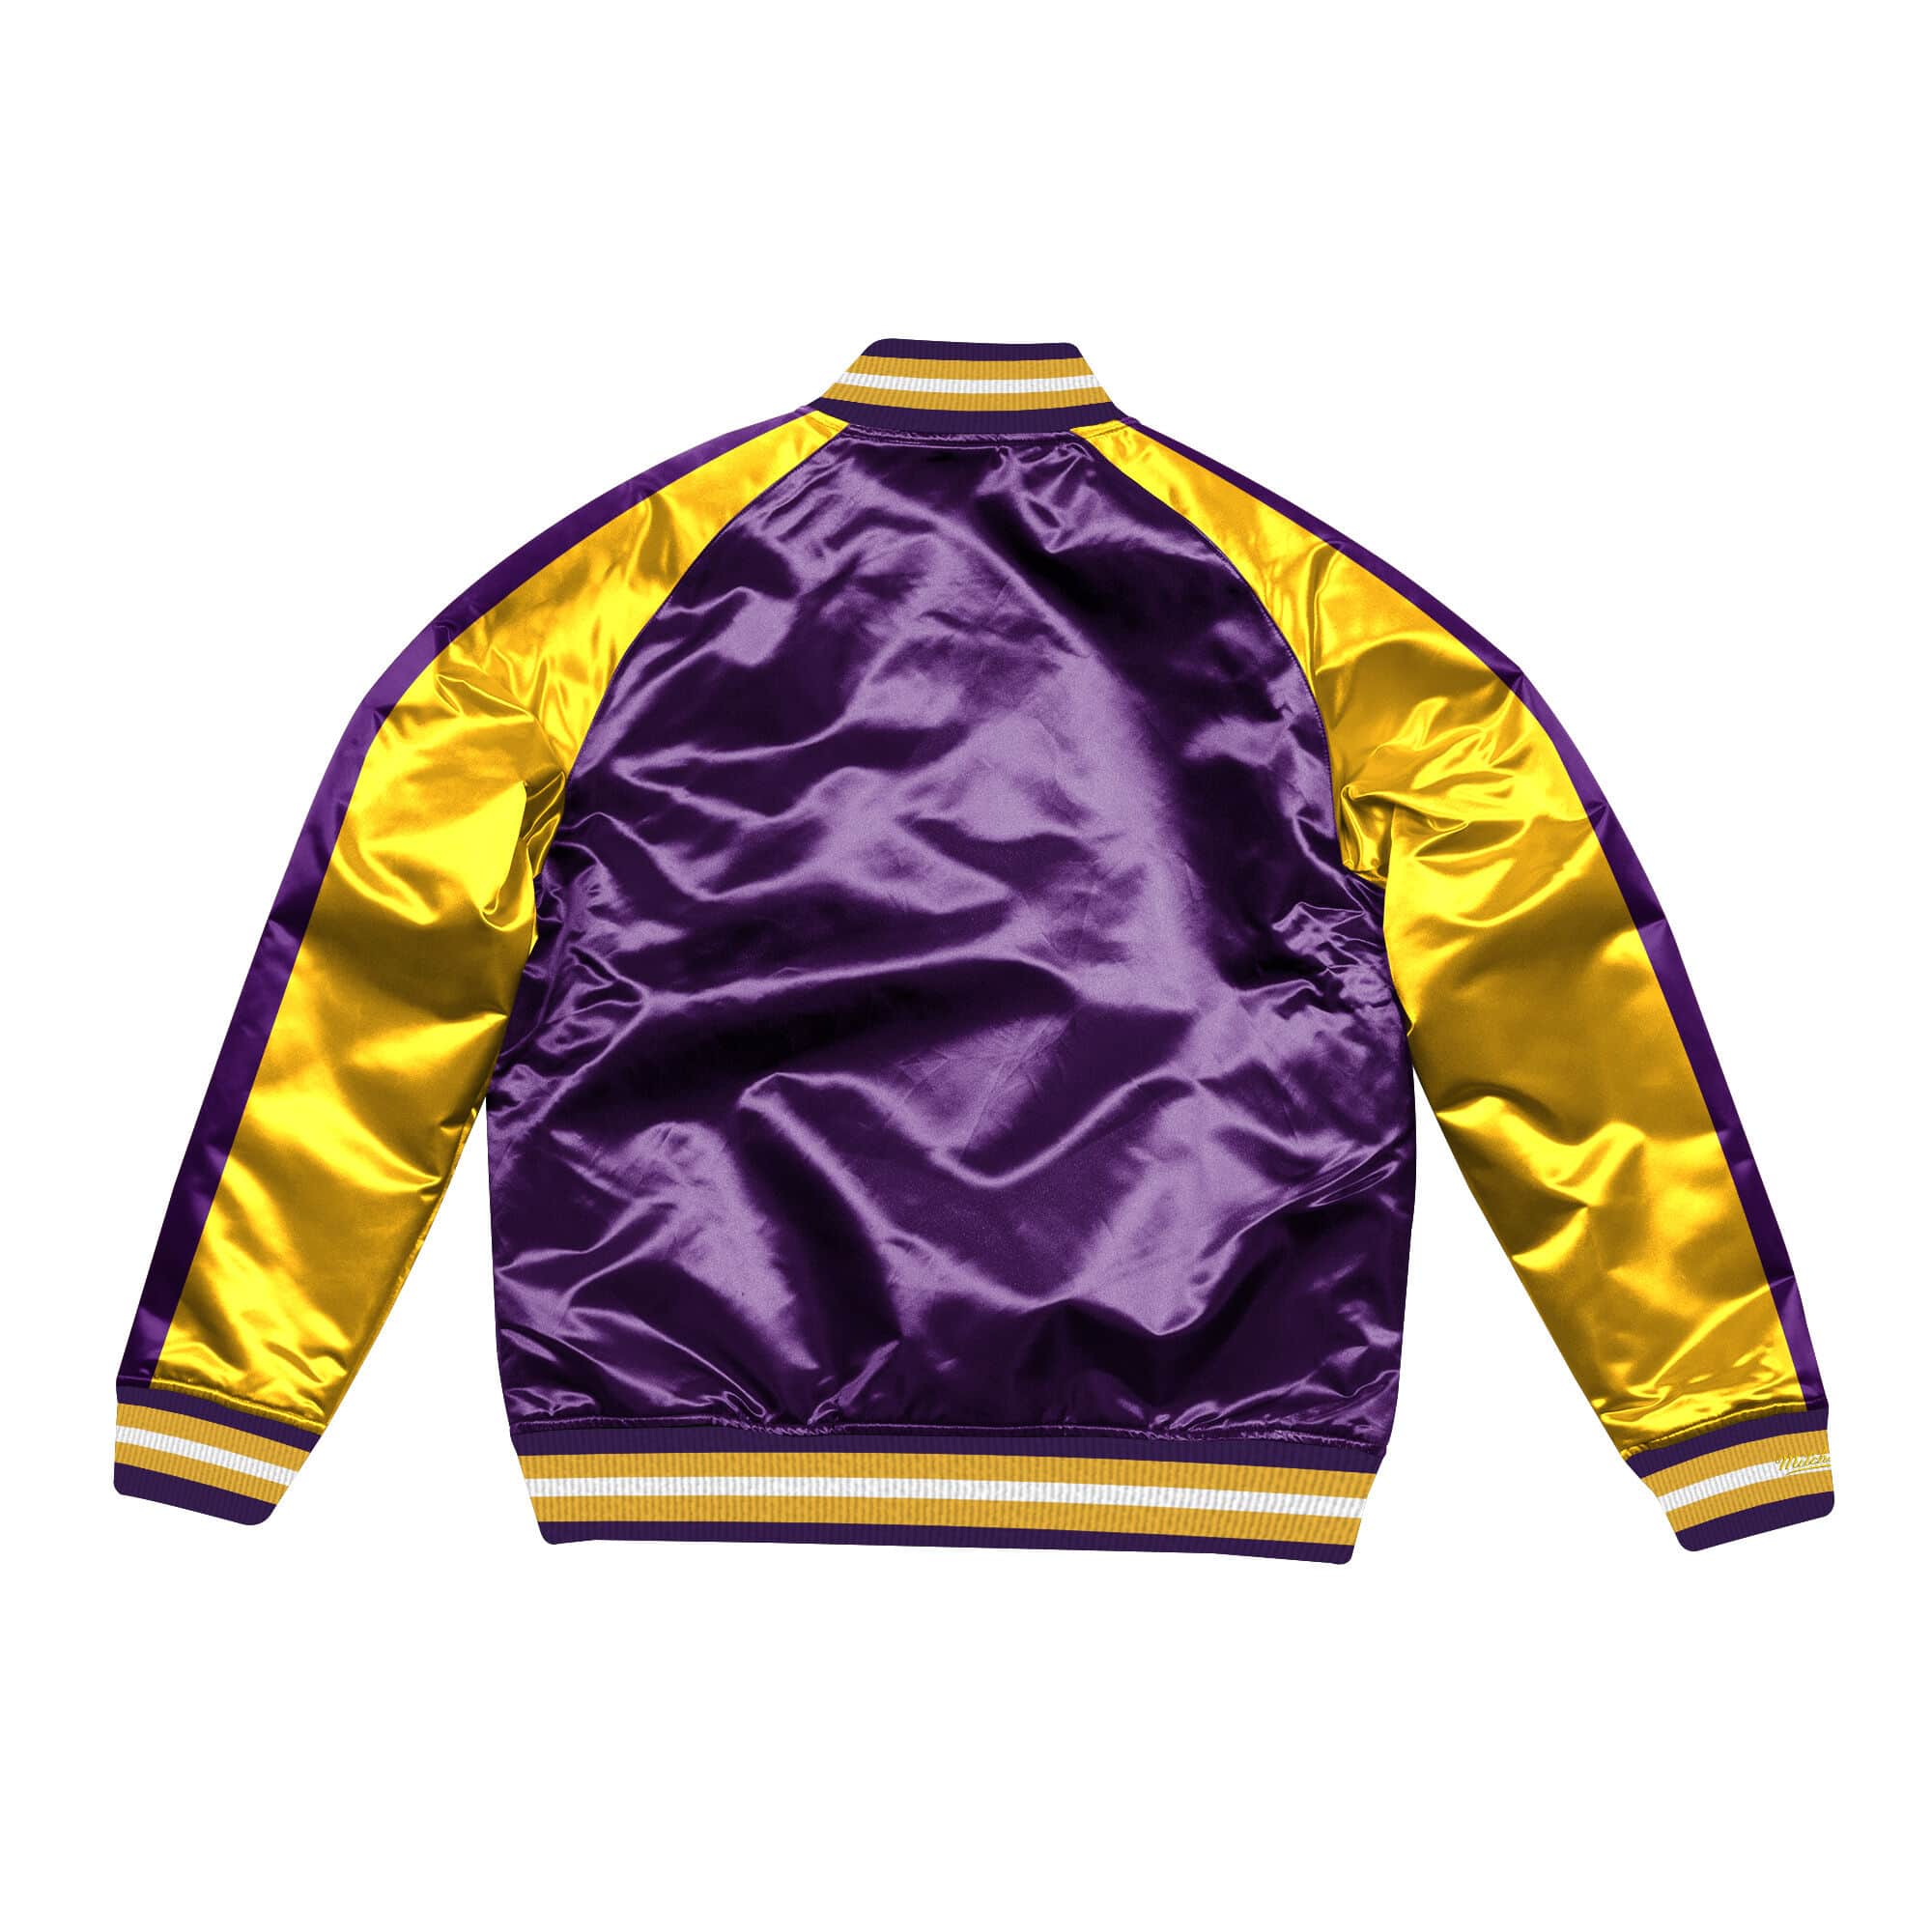 Los Angeles Lakers Two Tone Varsity Jacket - Maker of Jacket